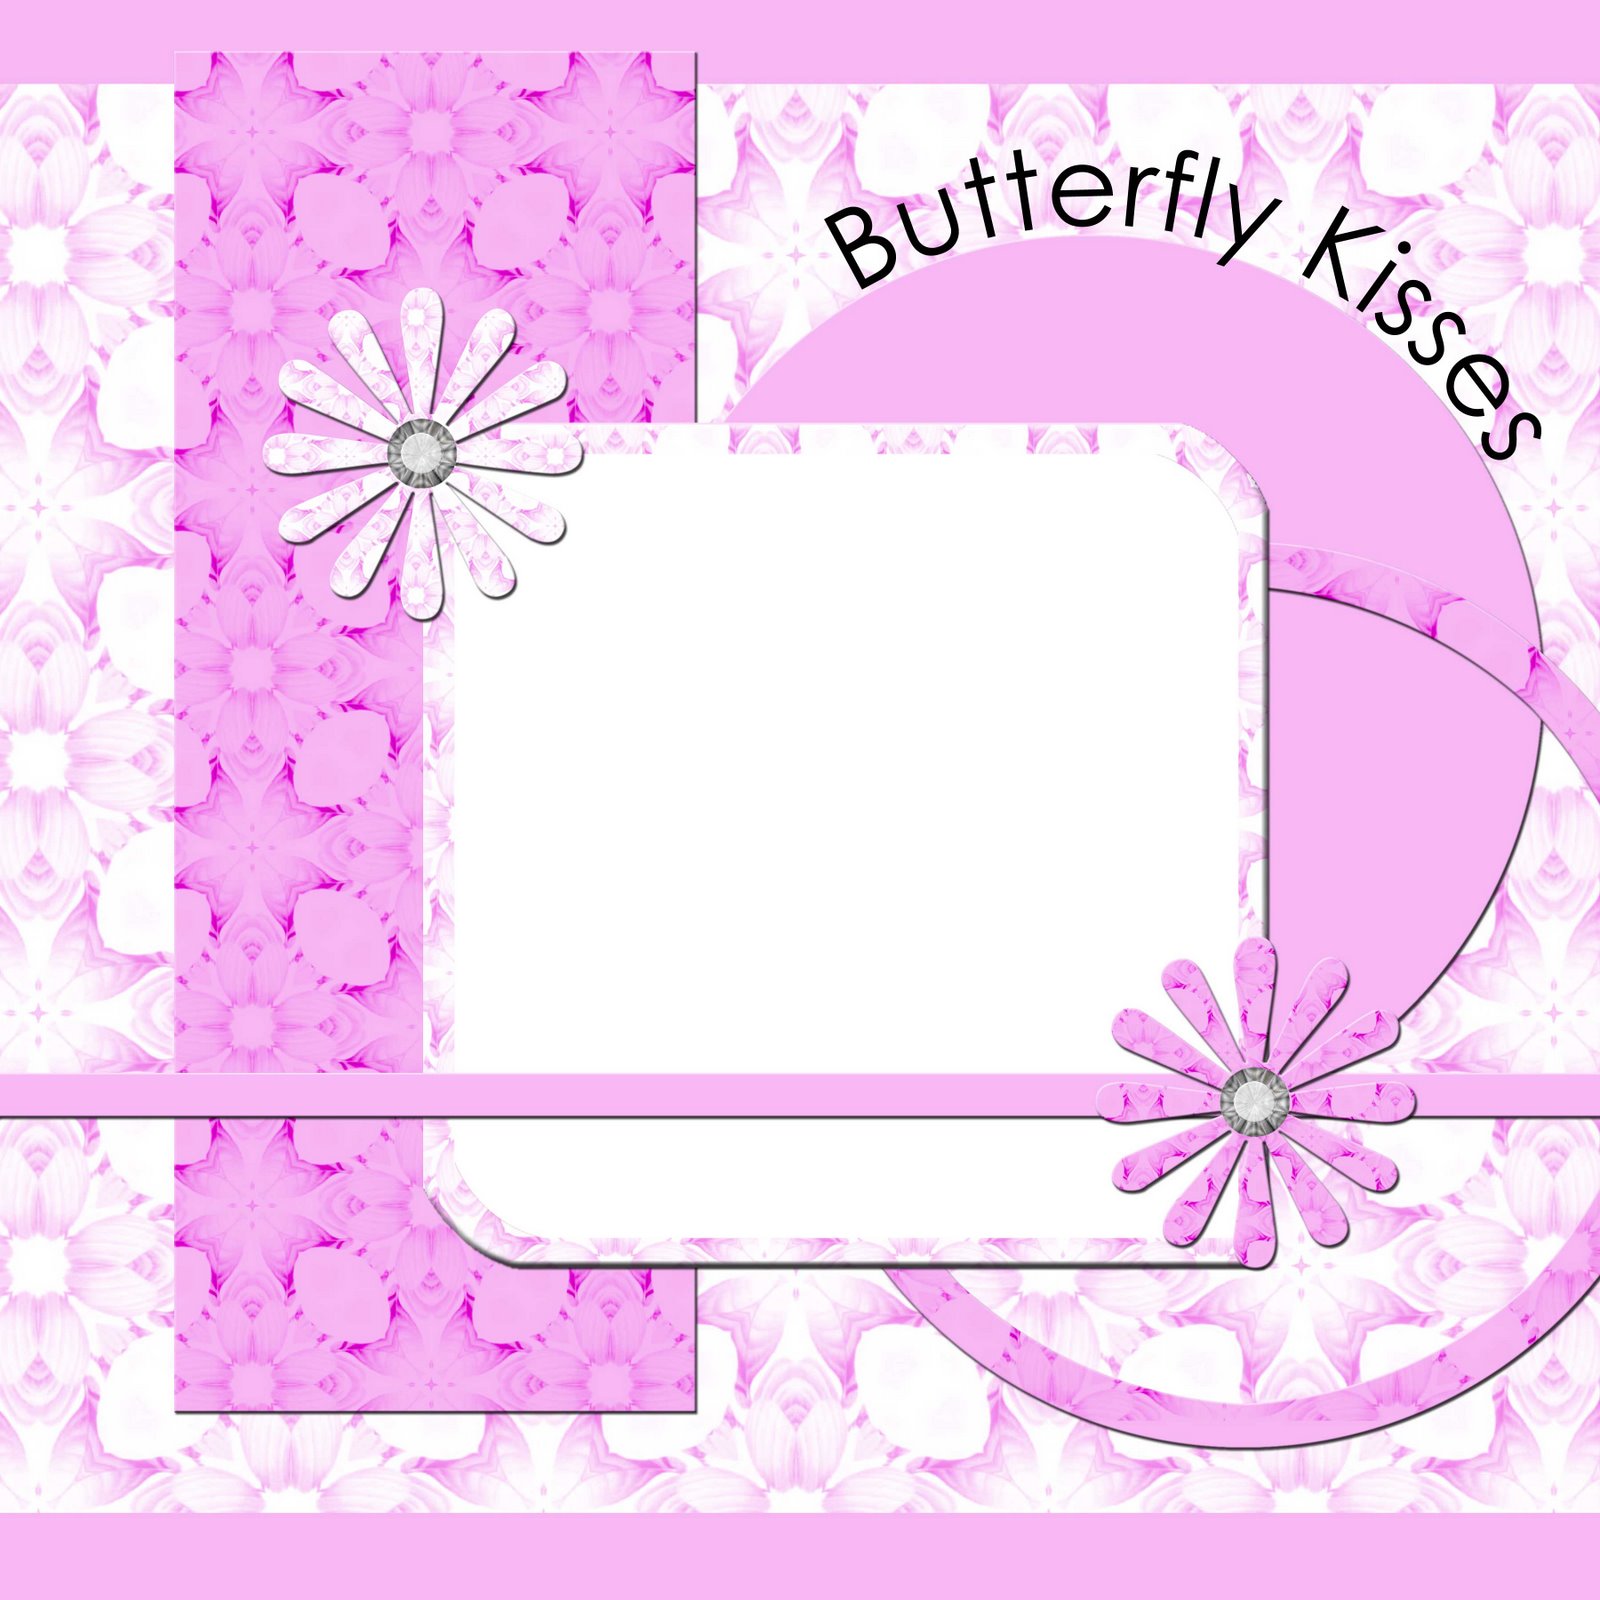 [butterflykisses.jpg]